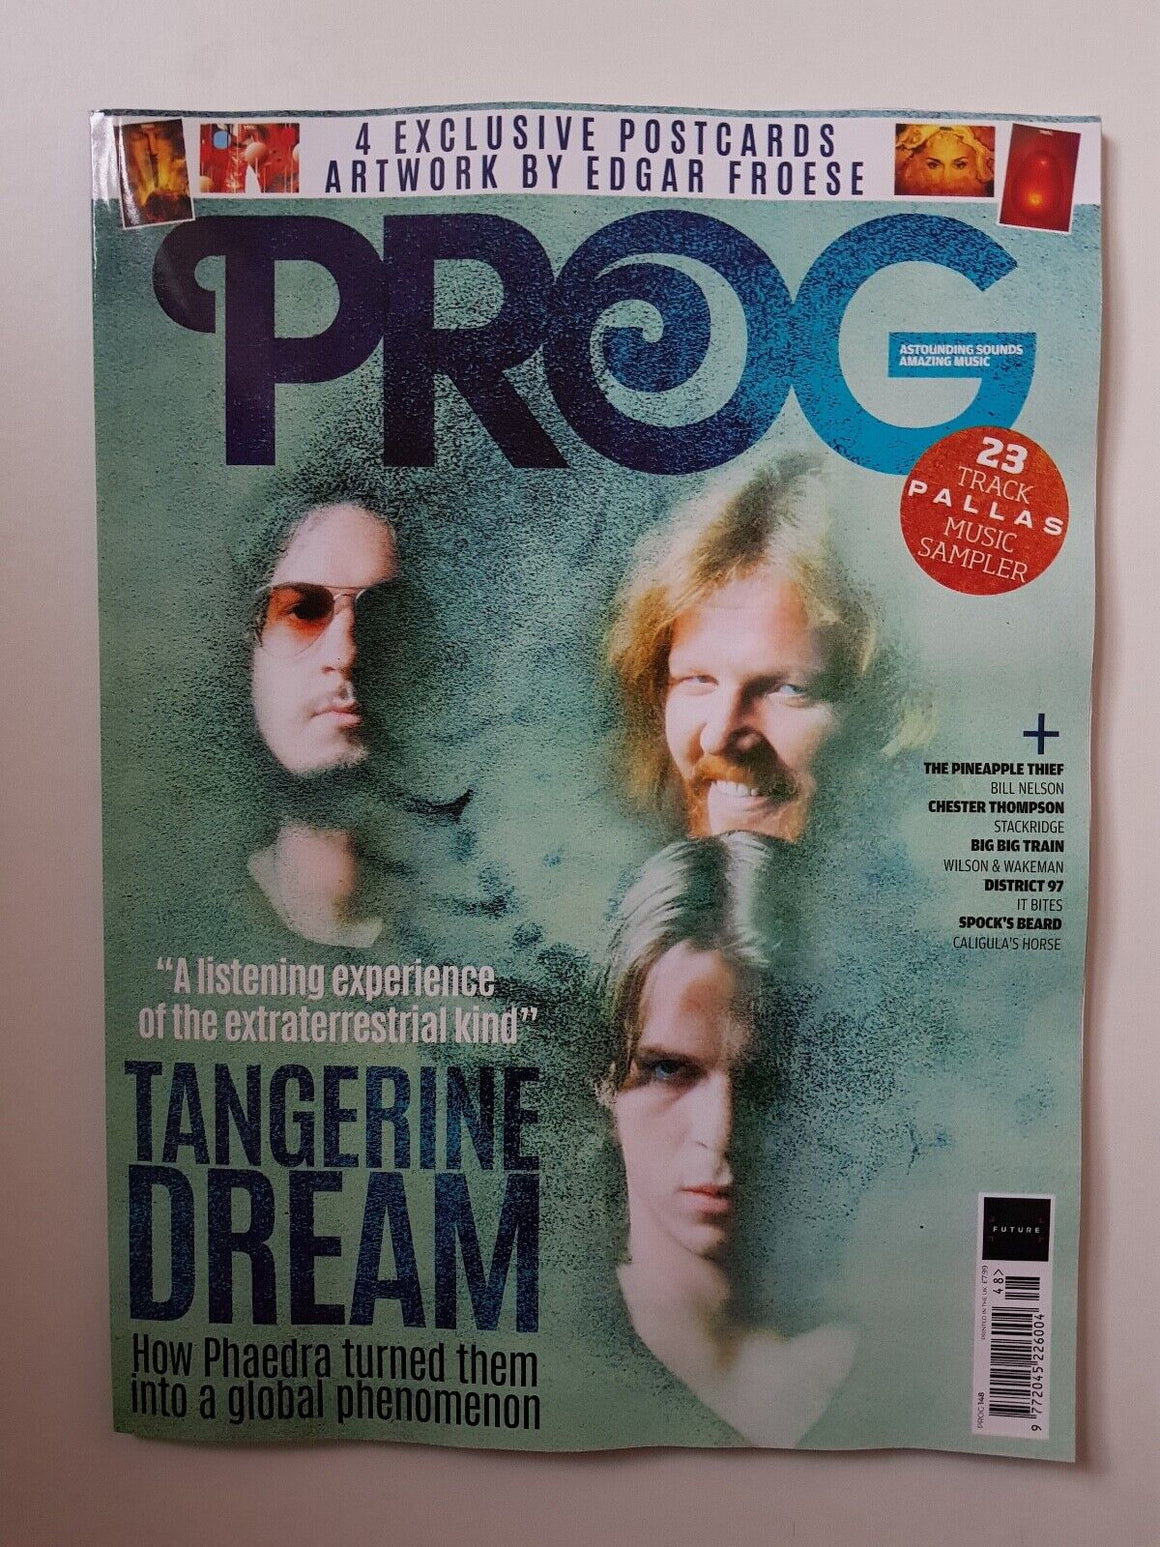 Prog magazine #148 2024 Prog Magazine Tangerine Dream & 4 Postcards